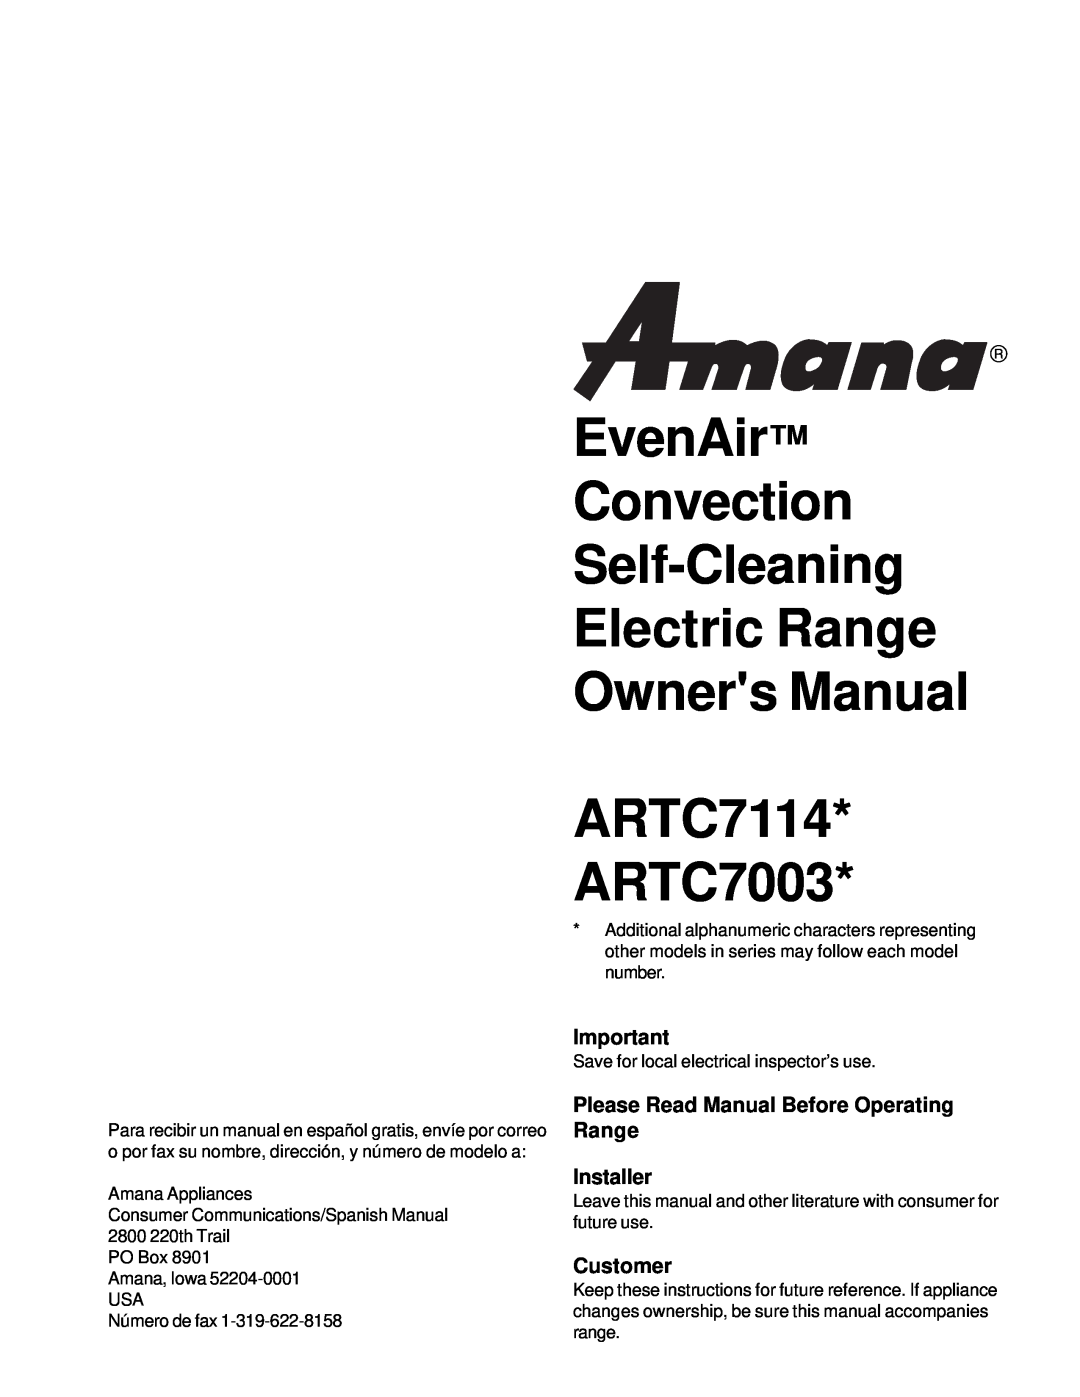 Amana ARTC7114*, ARTC7003* owner manual Please Read Manual Before Operating Range Installer, Customer, ARTC7114 ARTC7003 